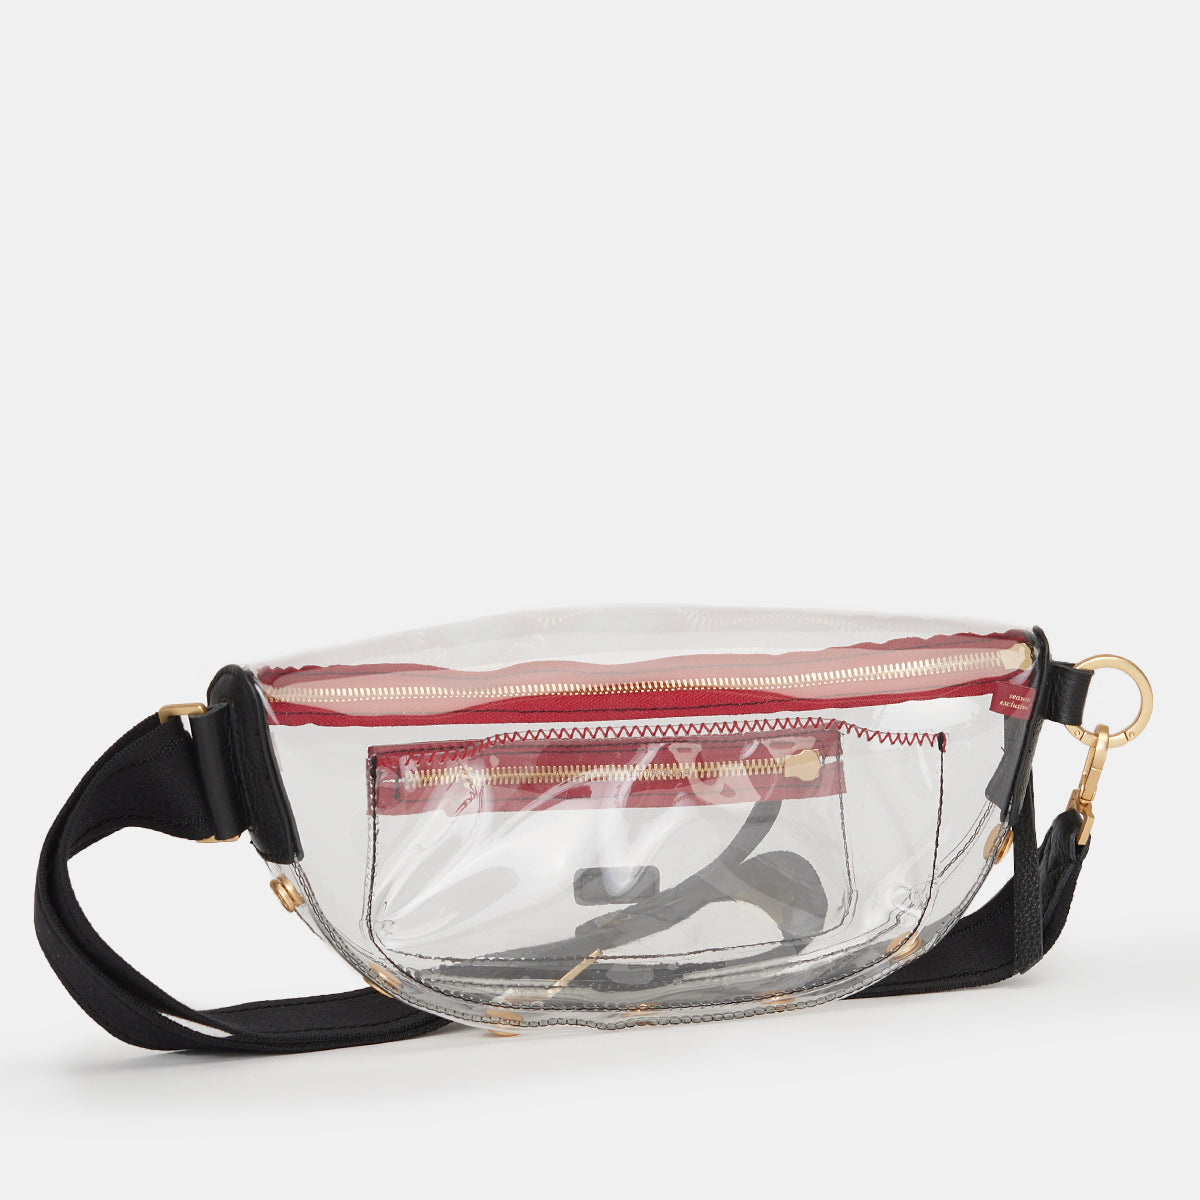 Louis Vuitton Clear Stadium Bags - Shop on Pinterest